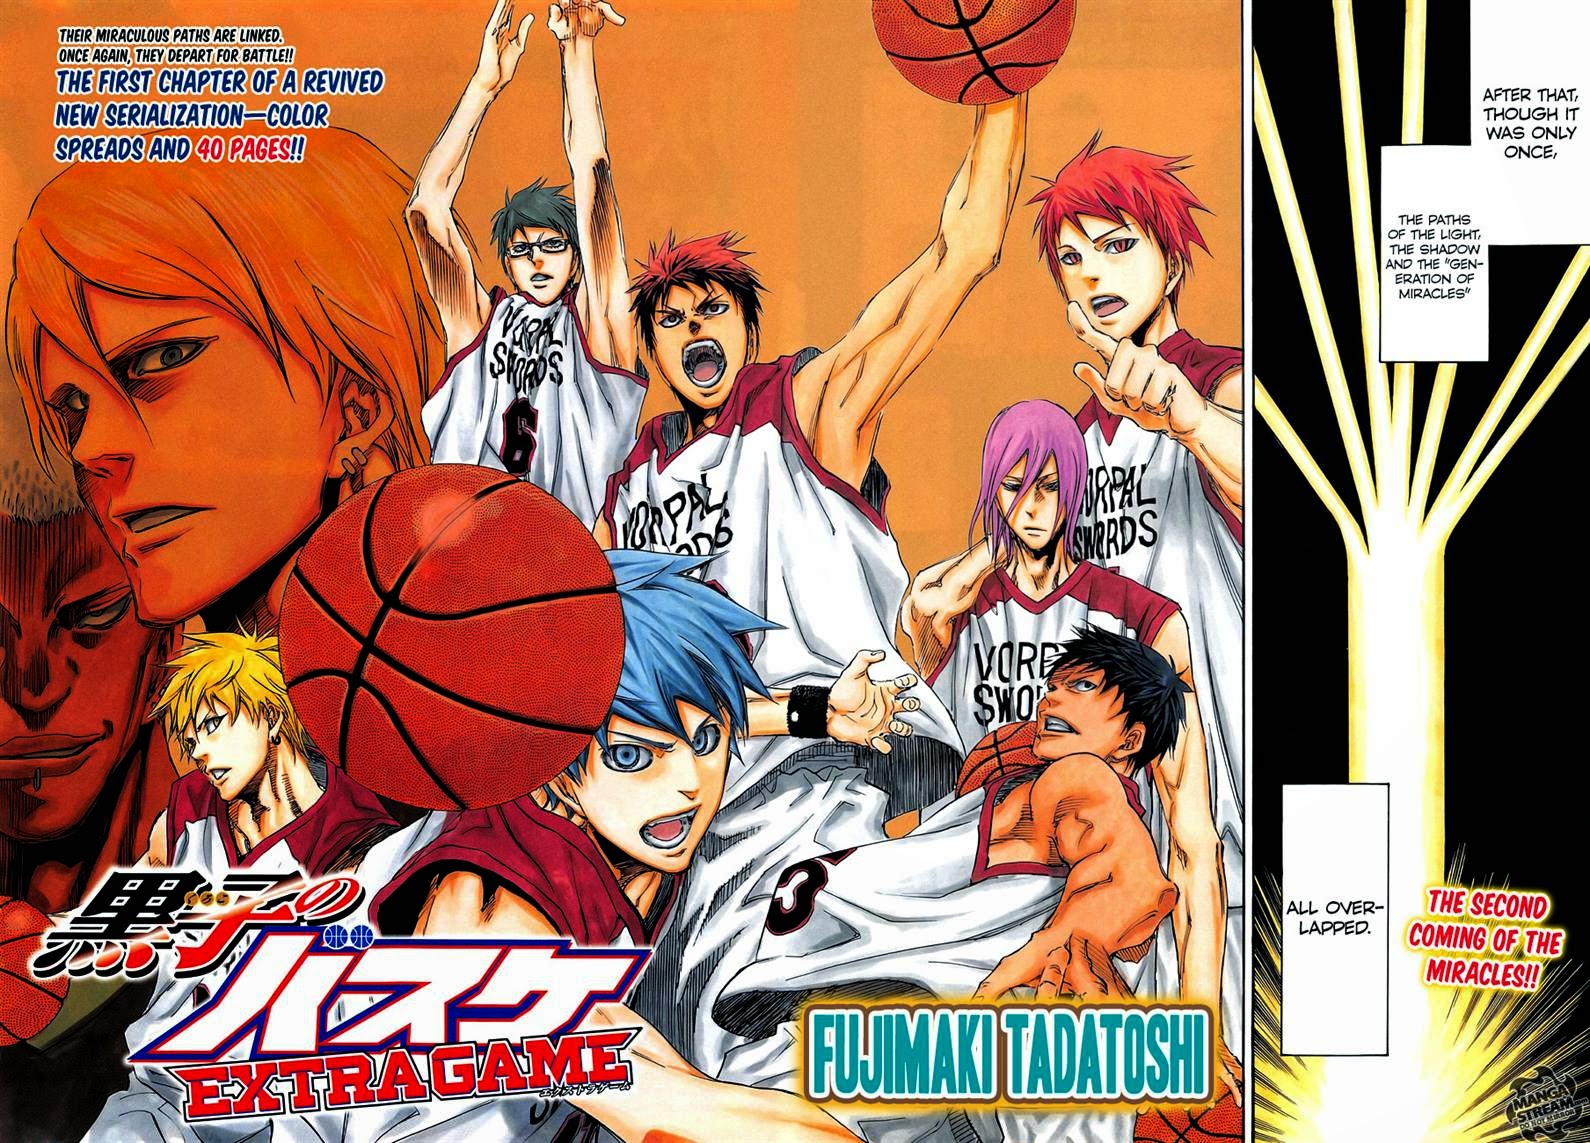 Kuroko no Basket Manga Extra Game 1 - Image 02-03